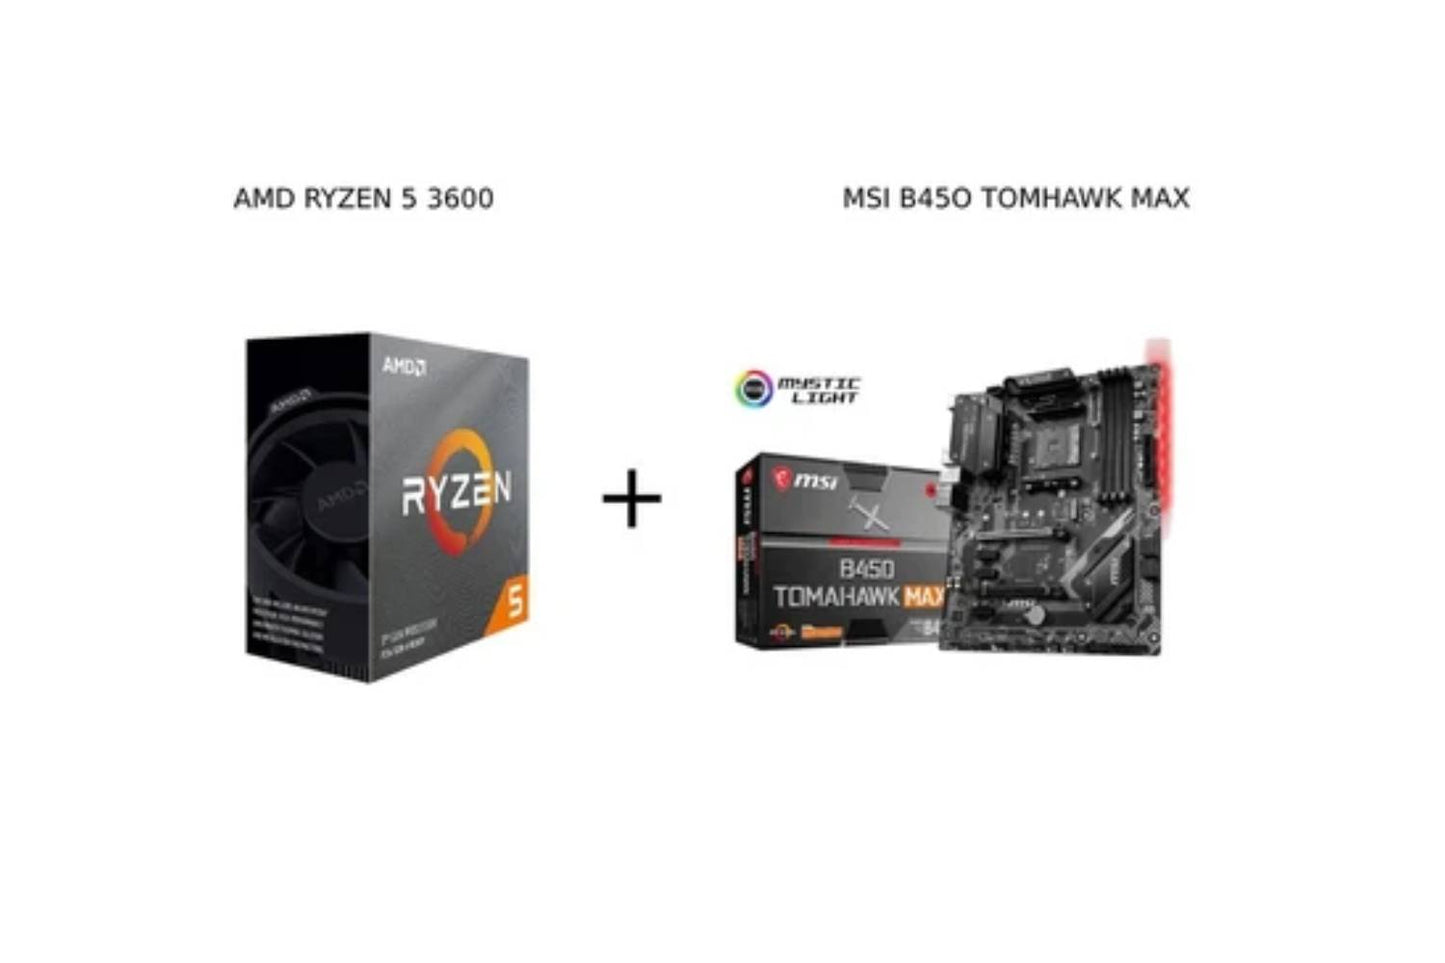 MSI B450 TOMAHAWK MAX Amd Ryzen MOTHERBOARD and AMD Ryzen 5 3600 CPU